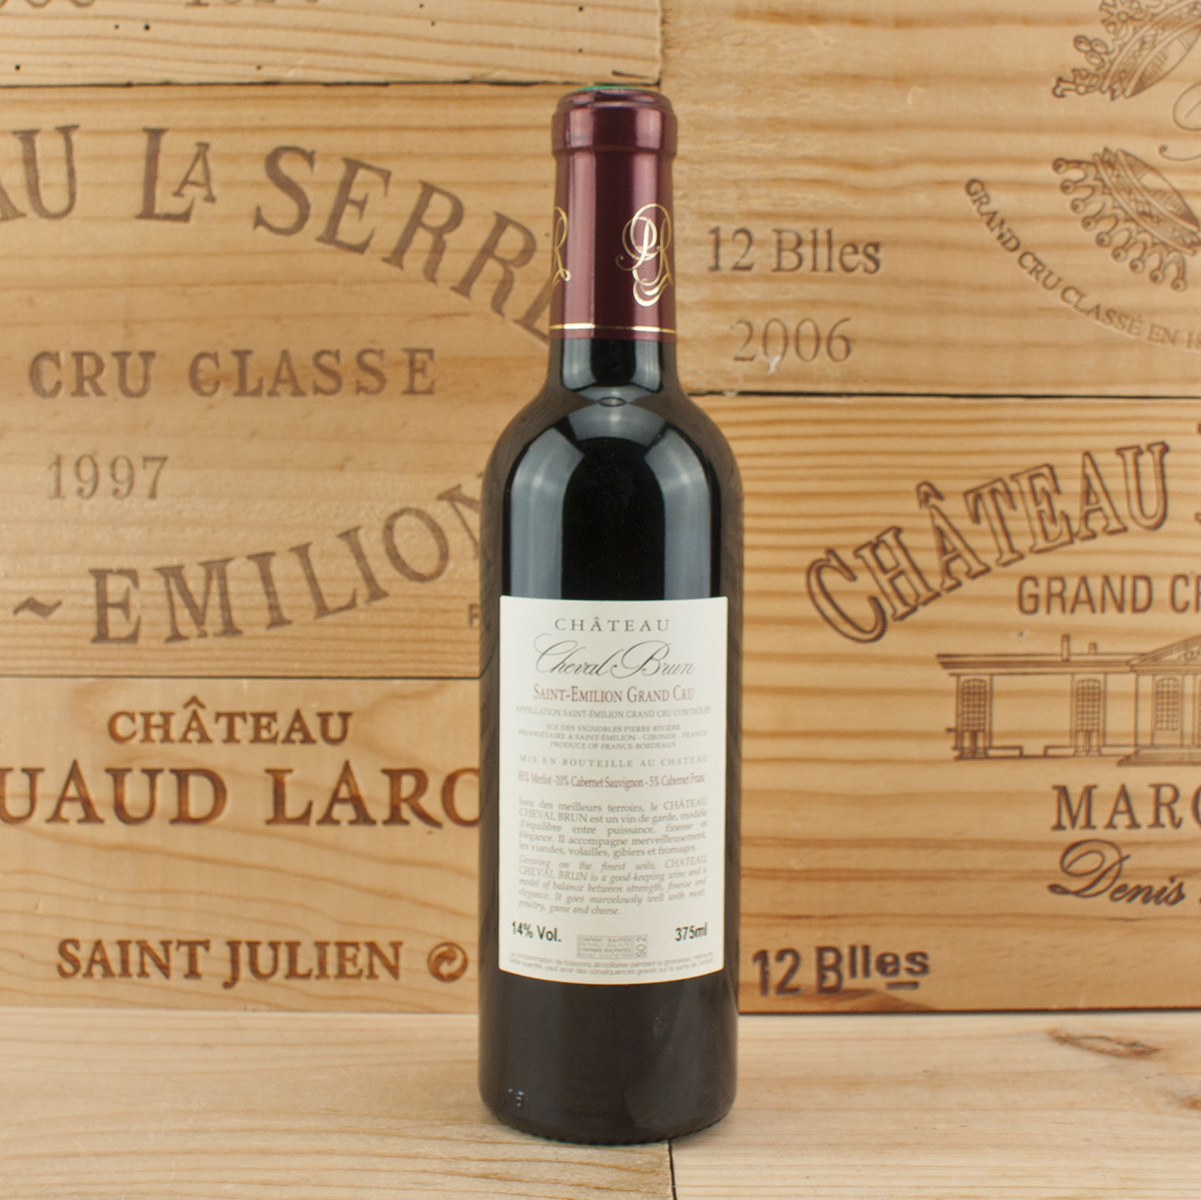 2015 Chateau Cheval Brun half bottle